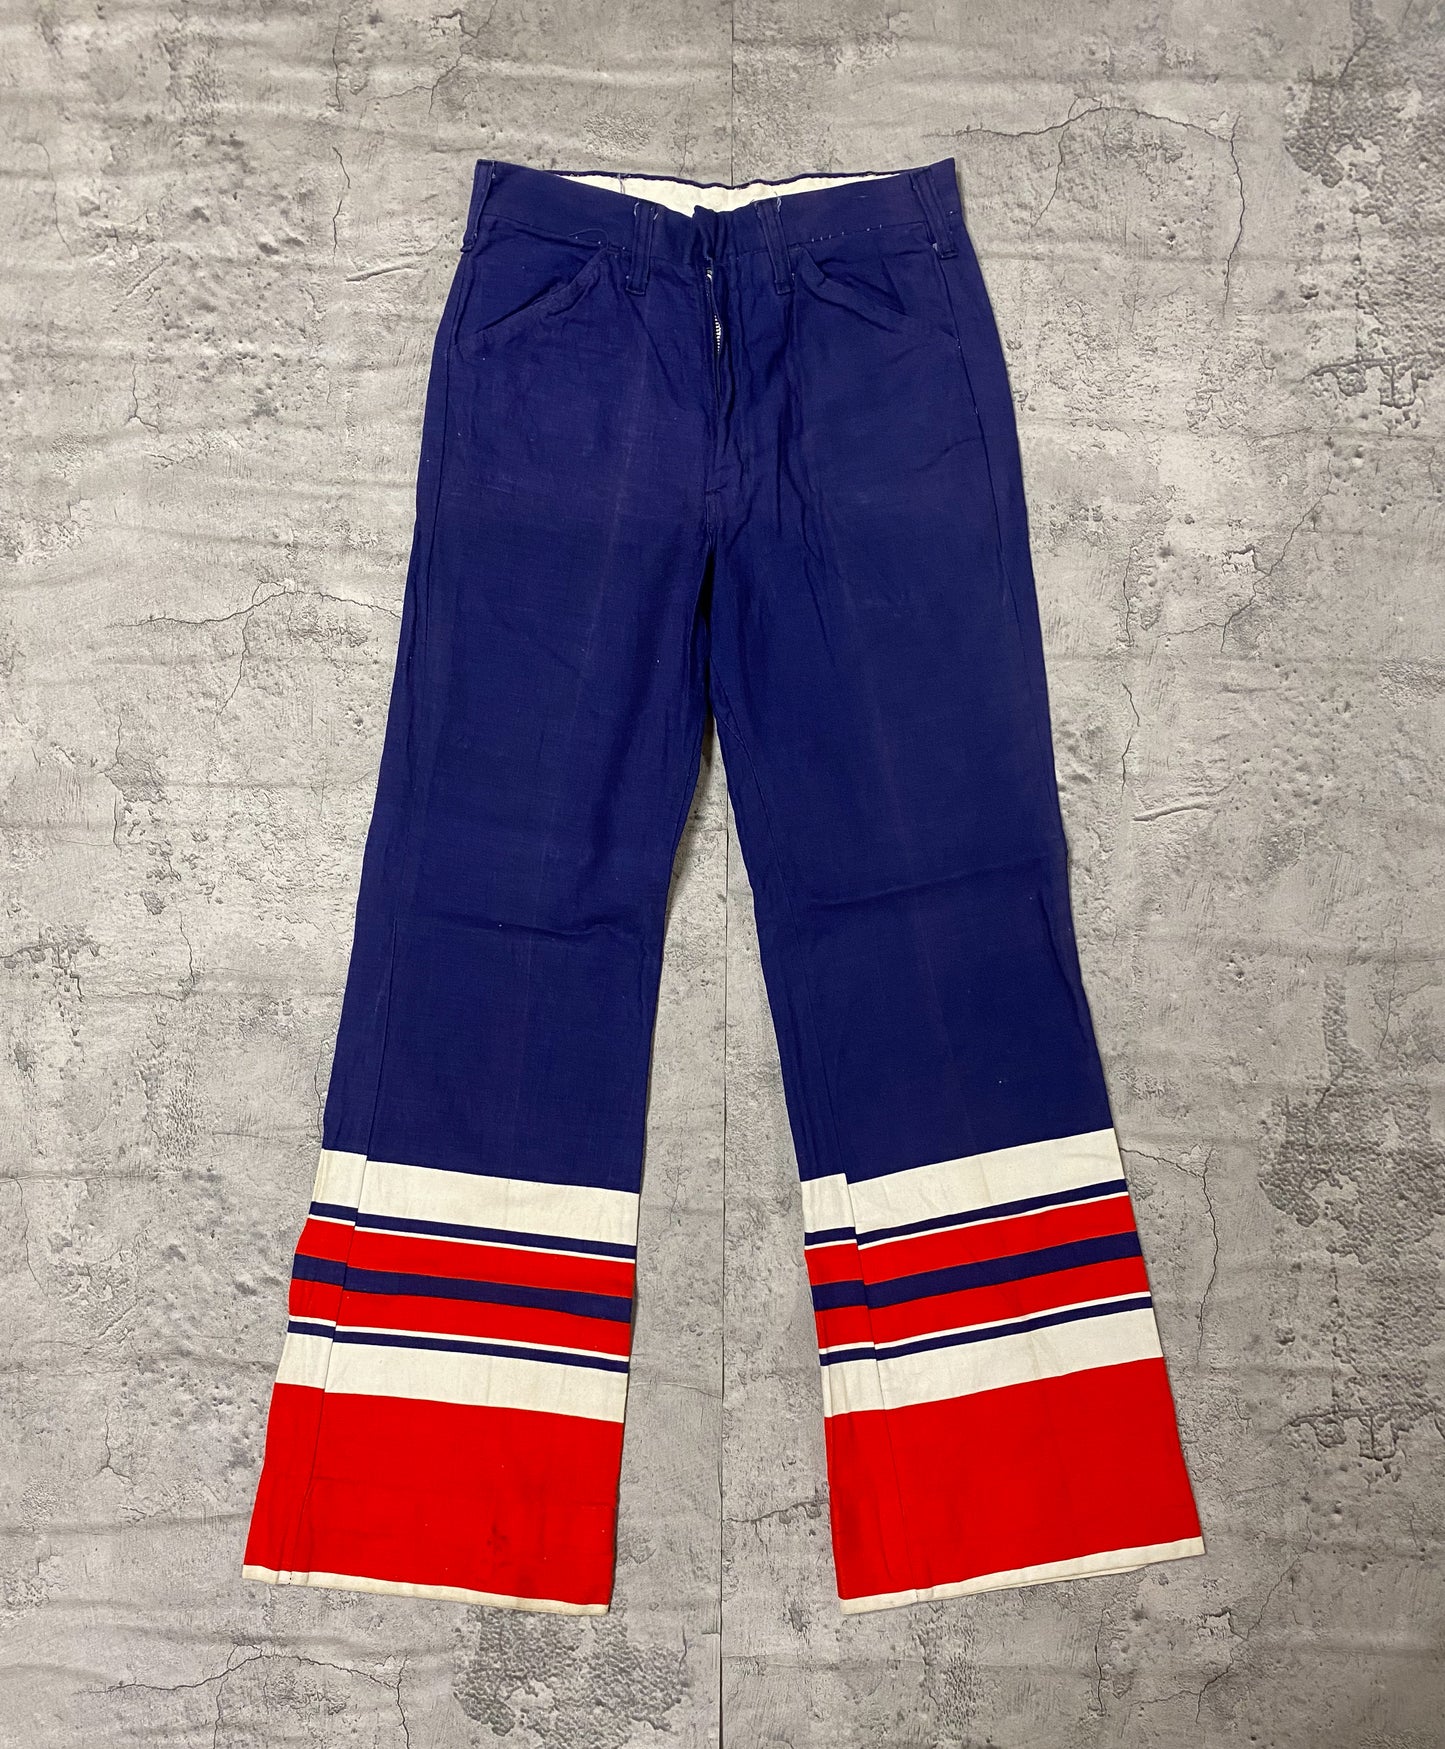 Tricolor Flared Pants vintage 70-80s